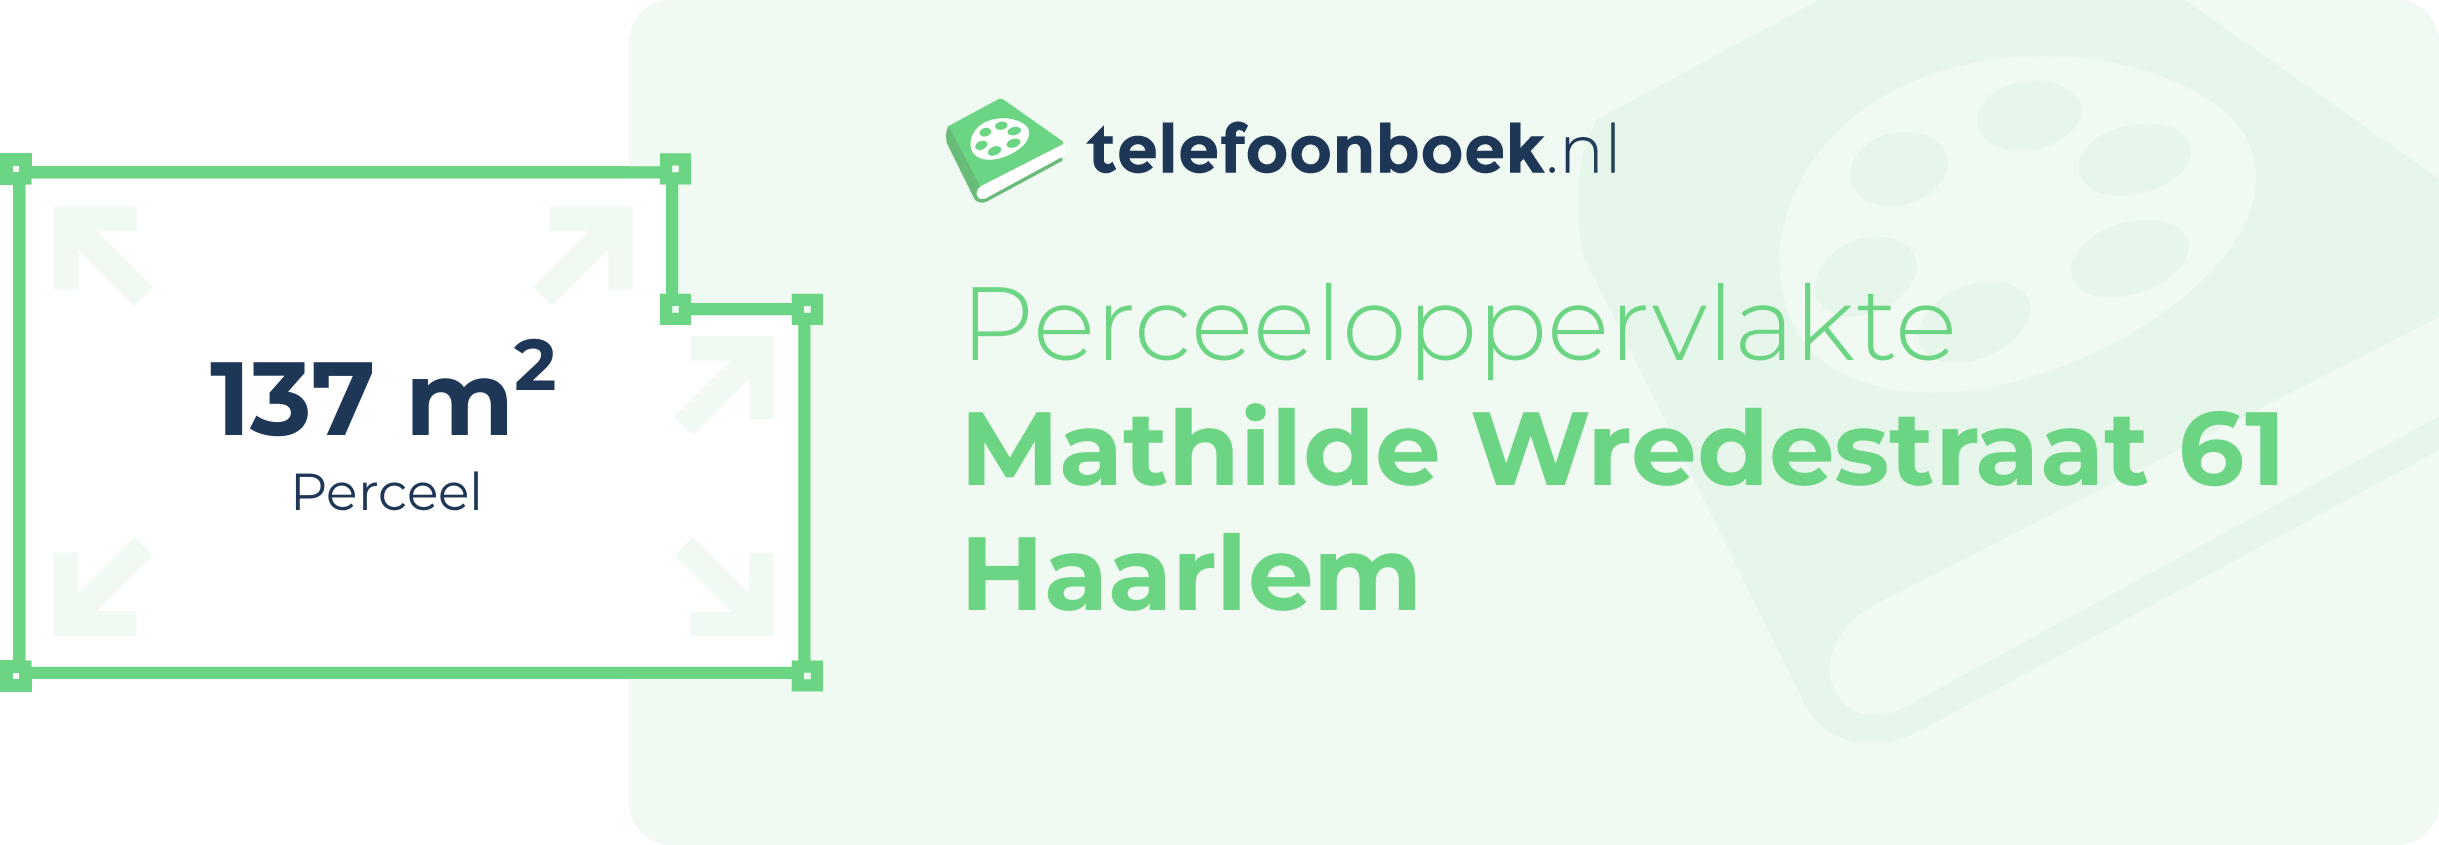 Perceeloppervlakte Mathilde Wredestraat 61 Haarlem